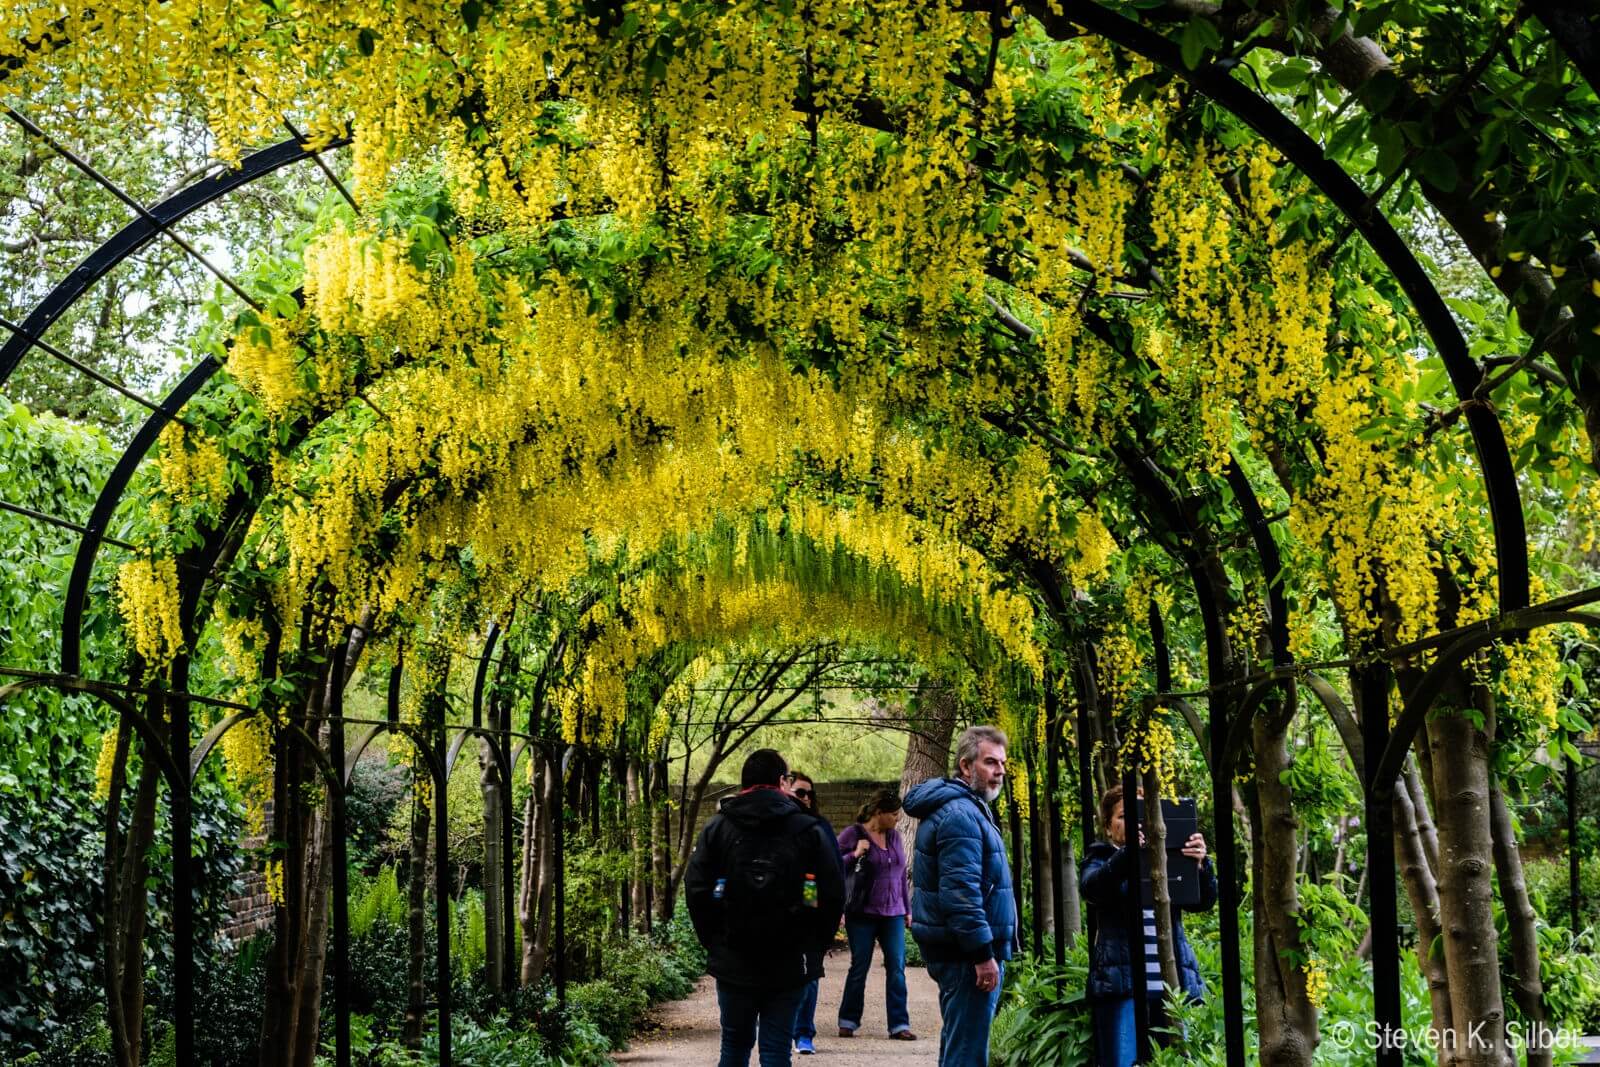 Image of Royal Botanic Gardens Kew by Steve Silber